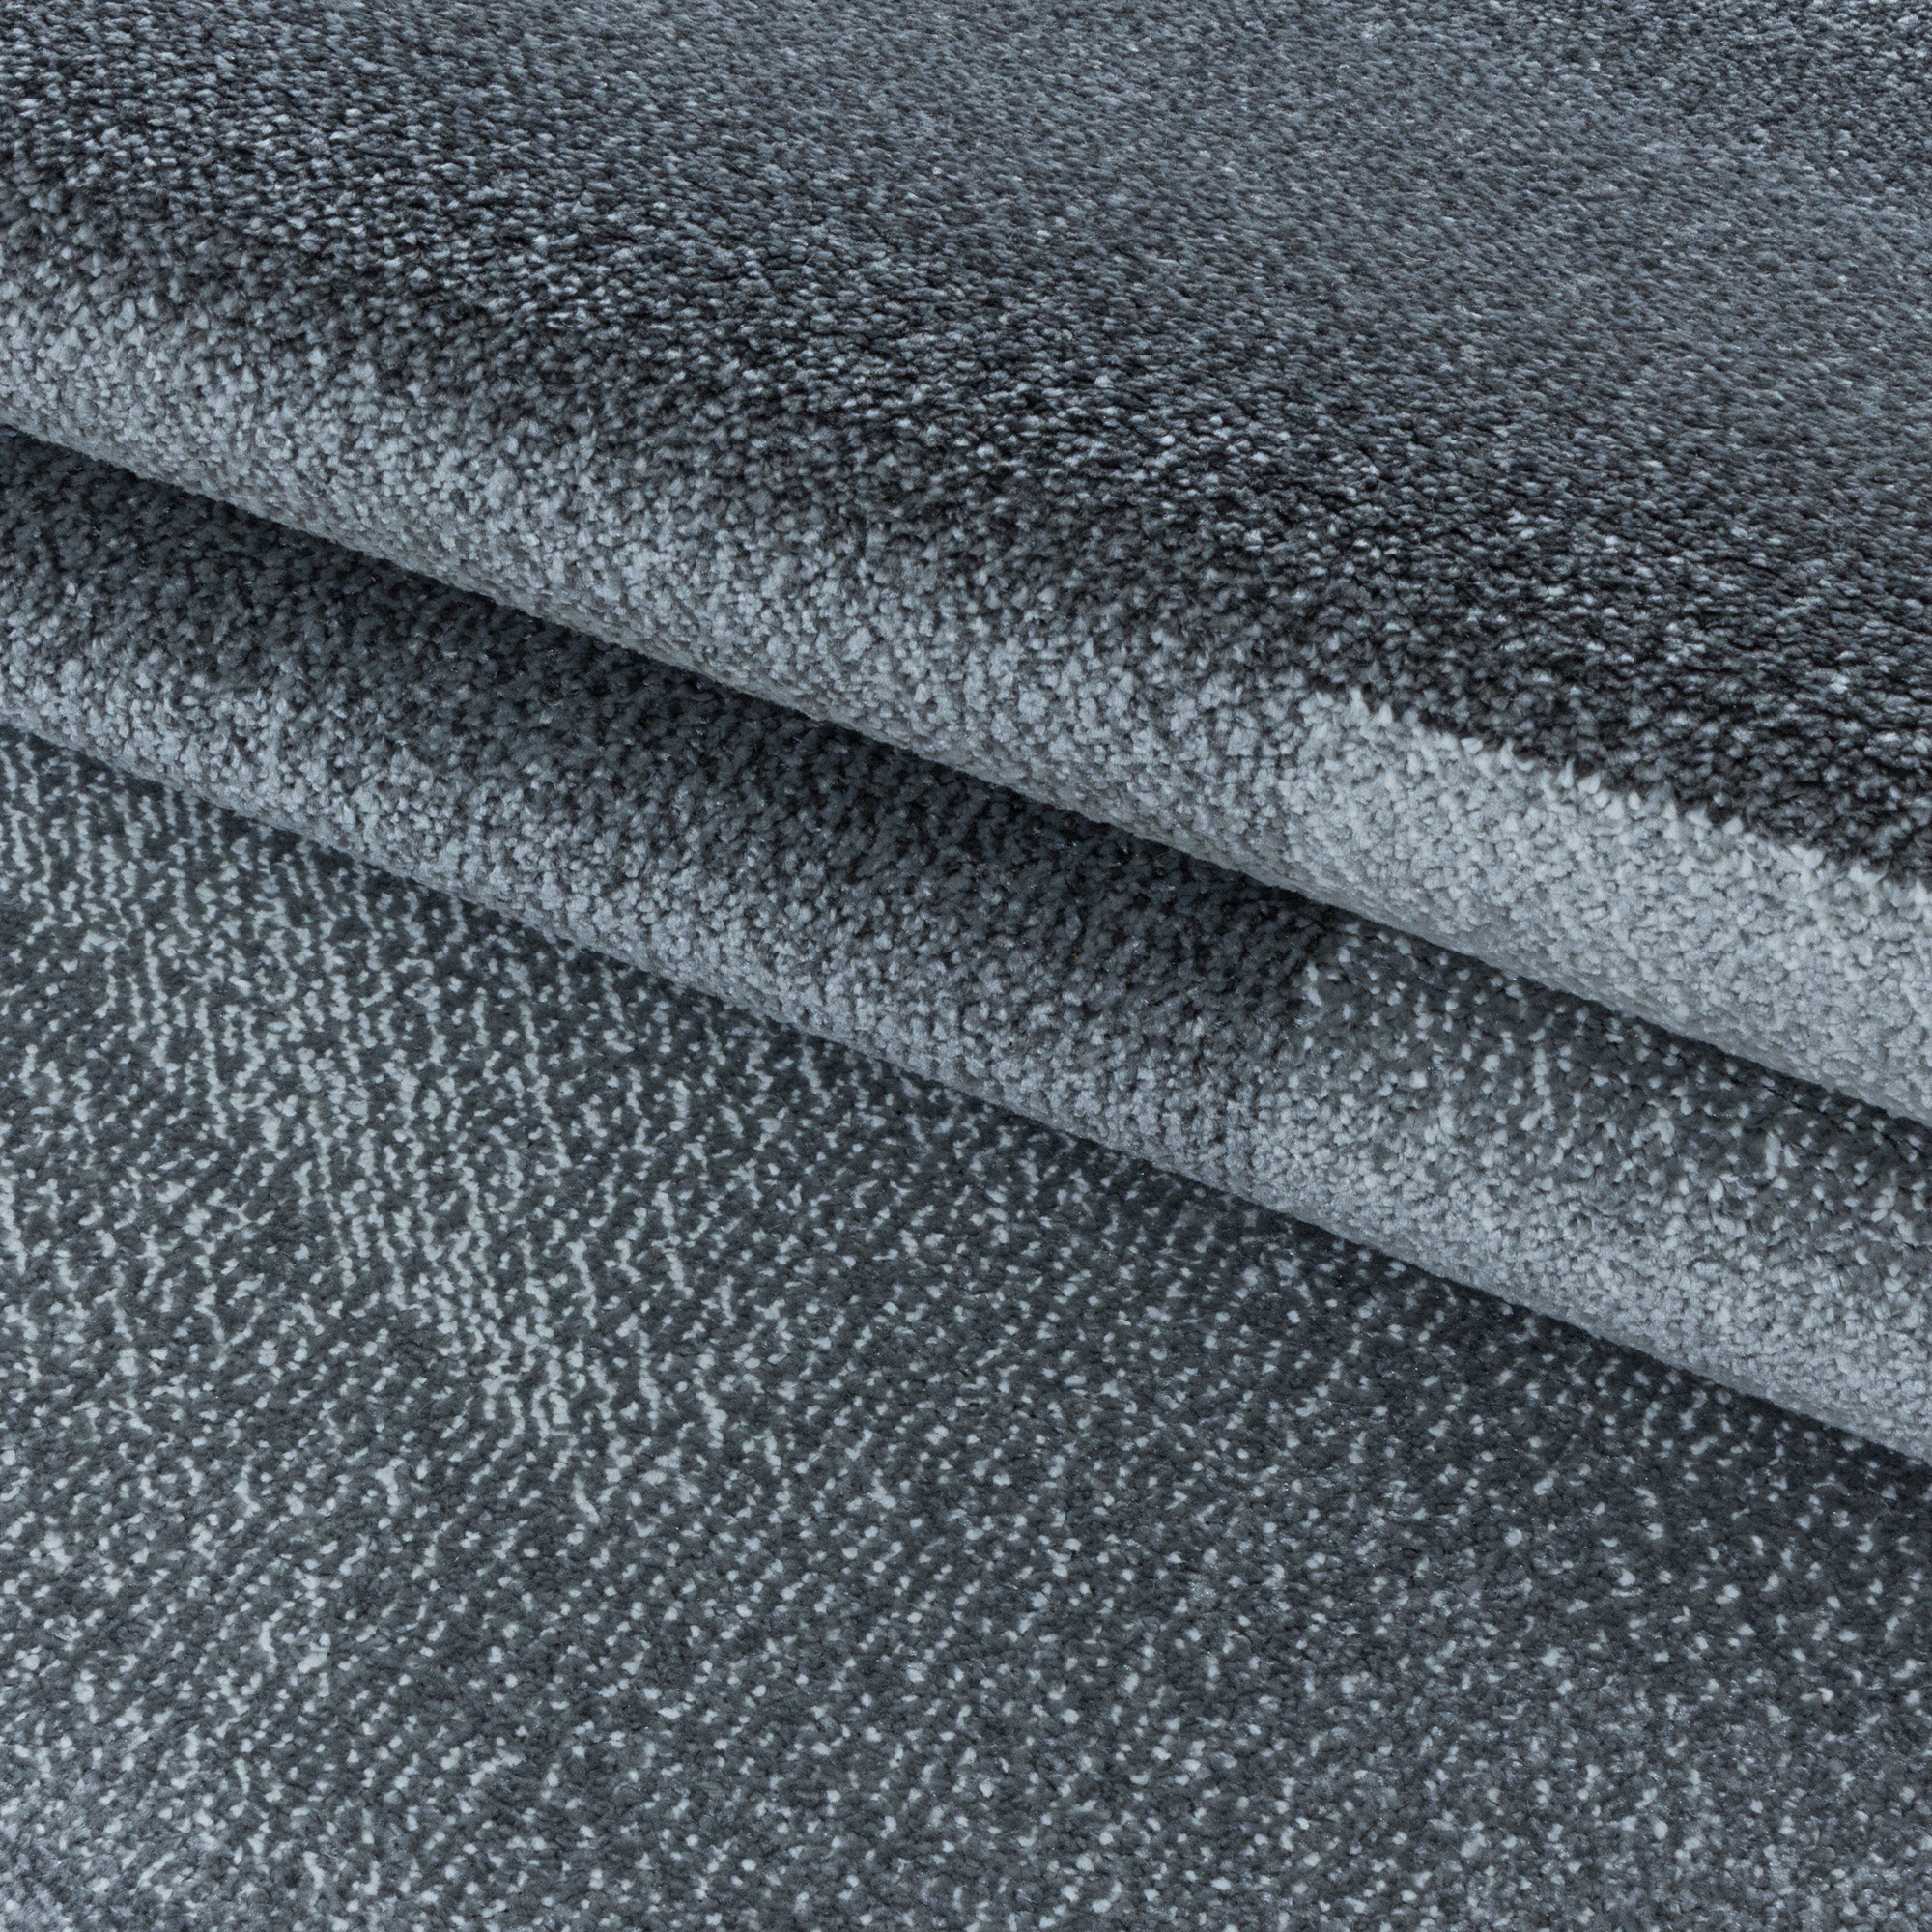 Kurzflor Design Teppich Wohnzimmerteppich Zipcode Muster Rechteck Soft Flor Grau